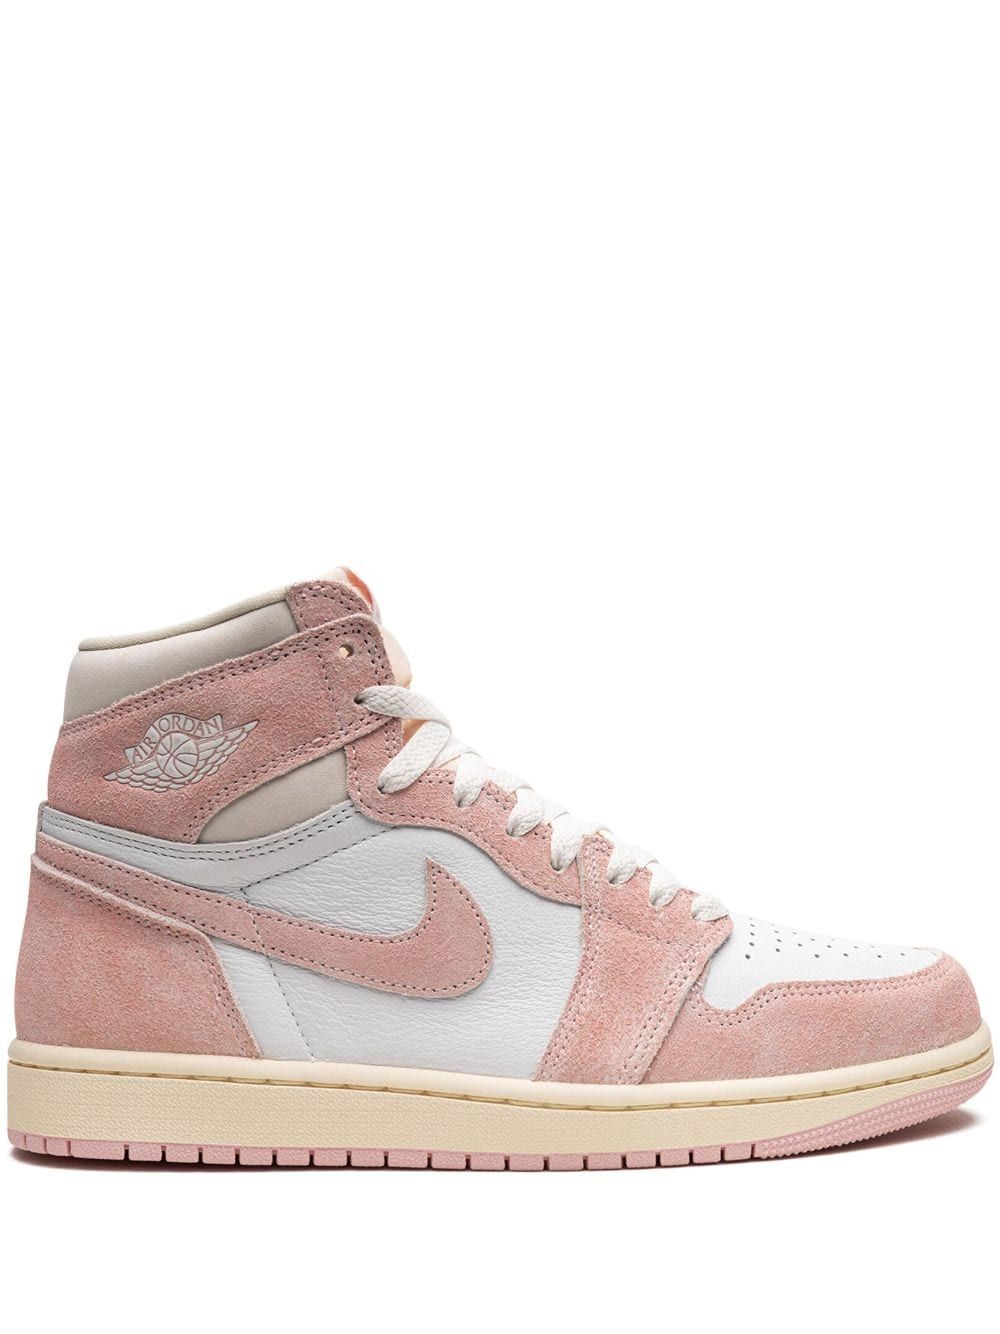 Air Jordan 1 "Washed Pink" sneakers | Farfetch Global